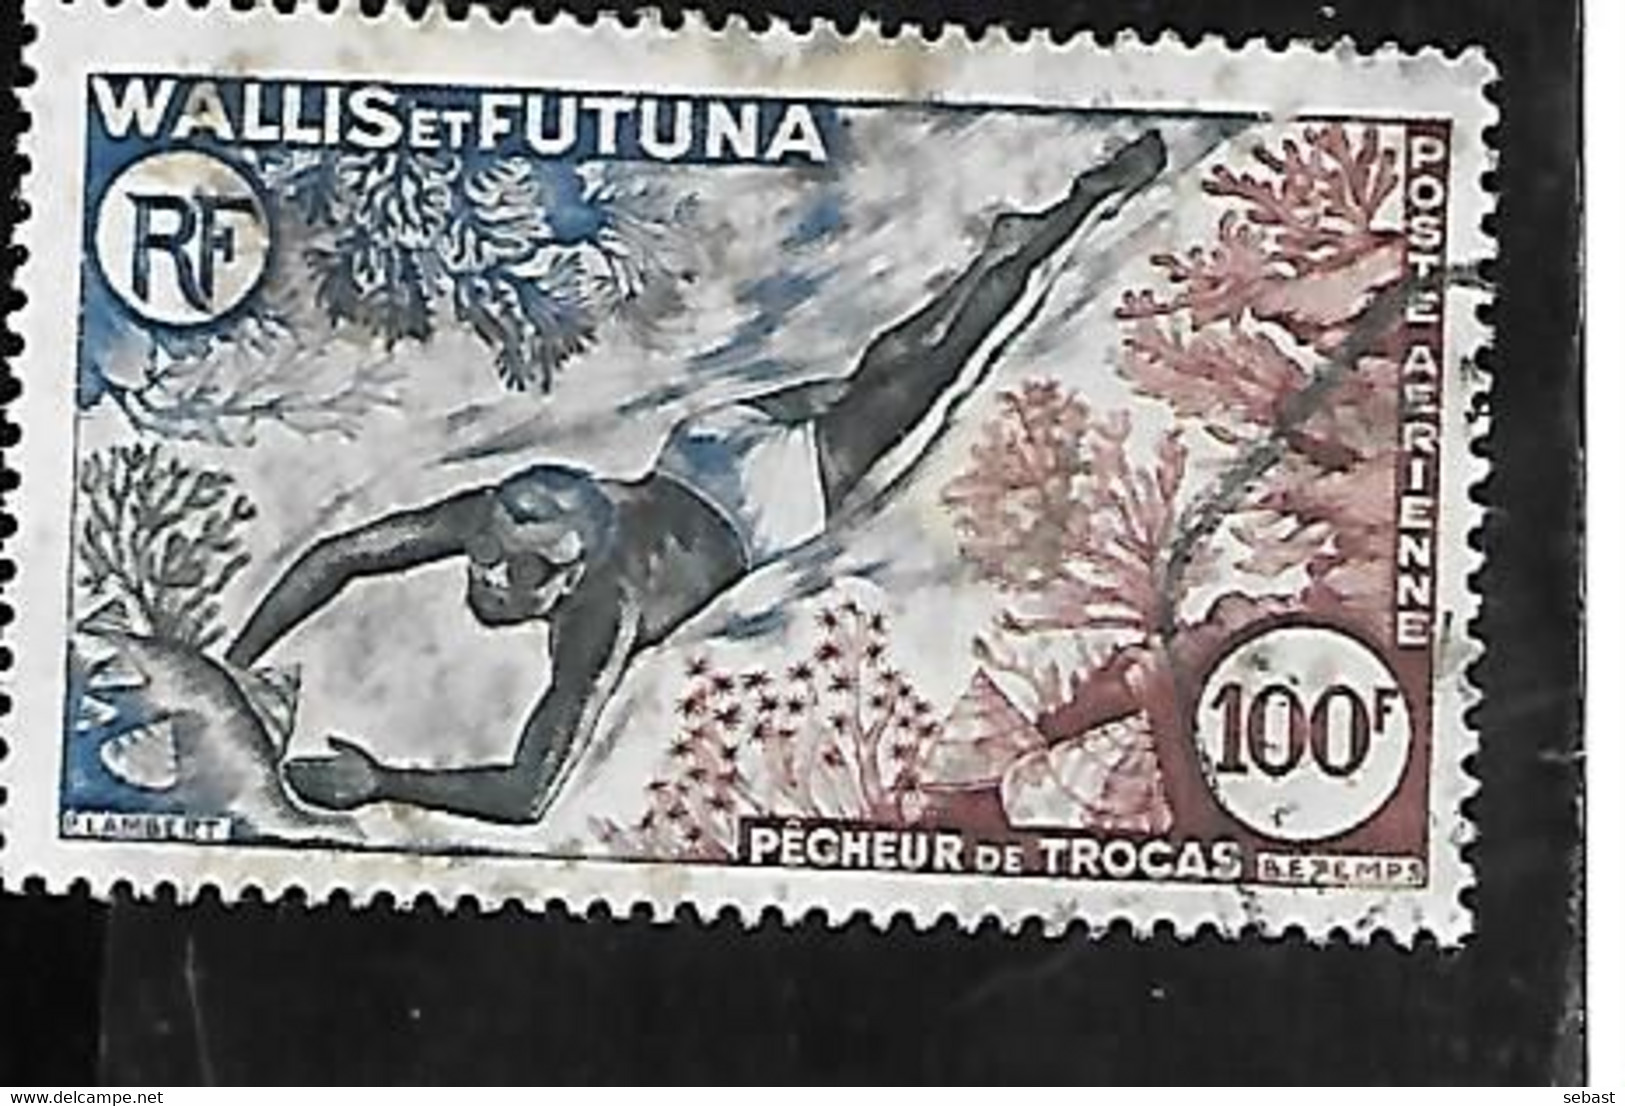 TIMBRE OBLITERE DE WALLIS ET FUTUNA DE 1962 N° MICHEL 84 - Used Stamps